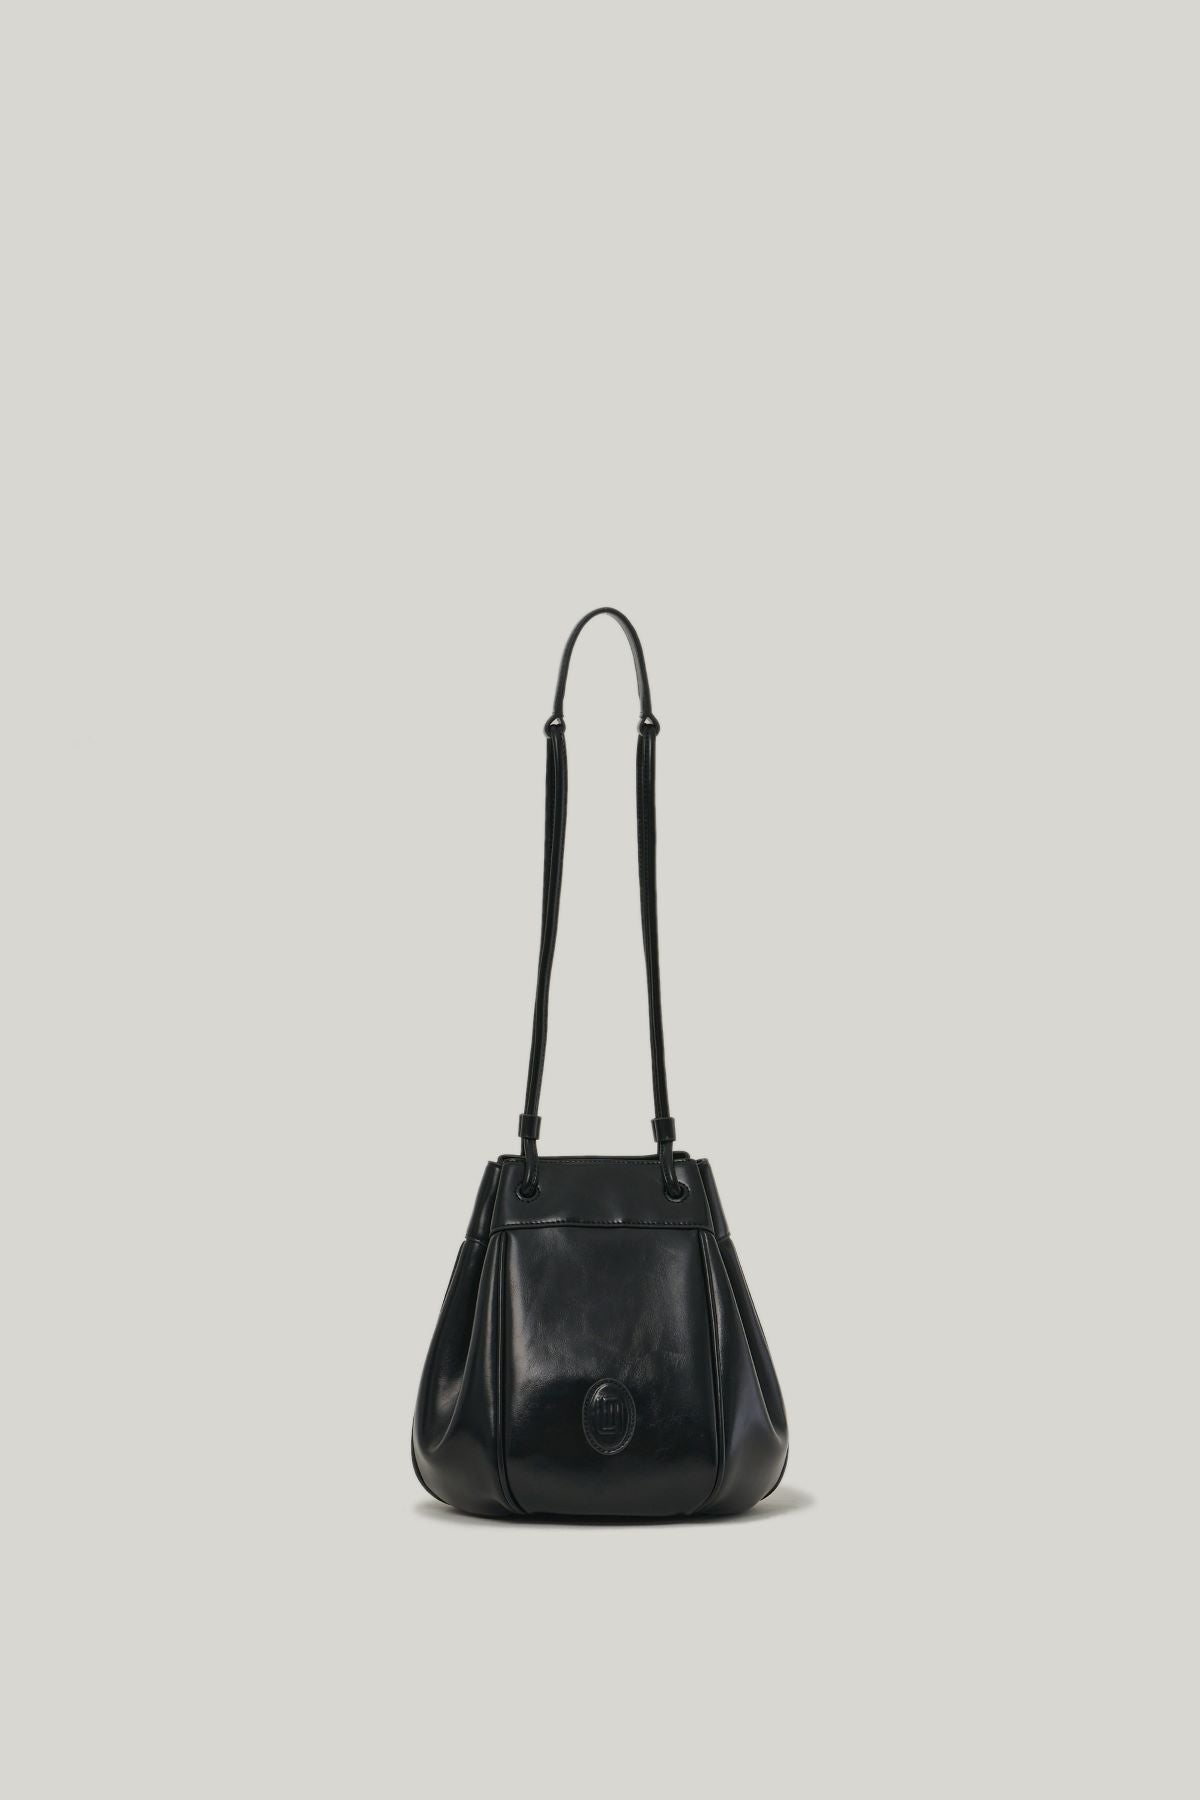 Aude Copain Bag In Soft Black